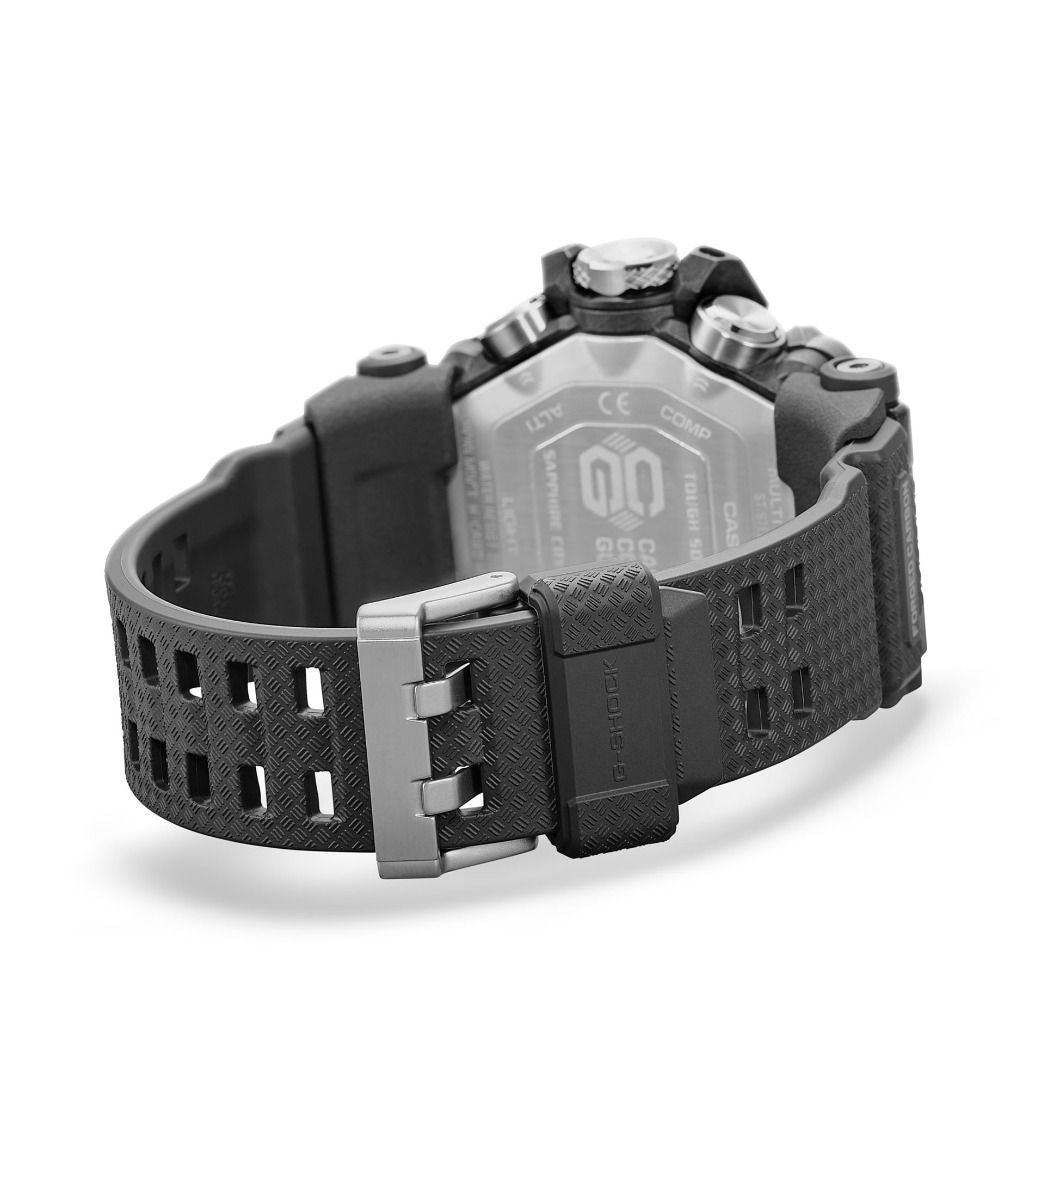 Orologio G-Shock Mudmaster GWG-2000-1A1ER nero stealth